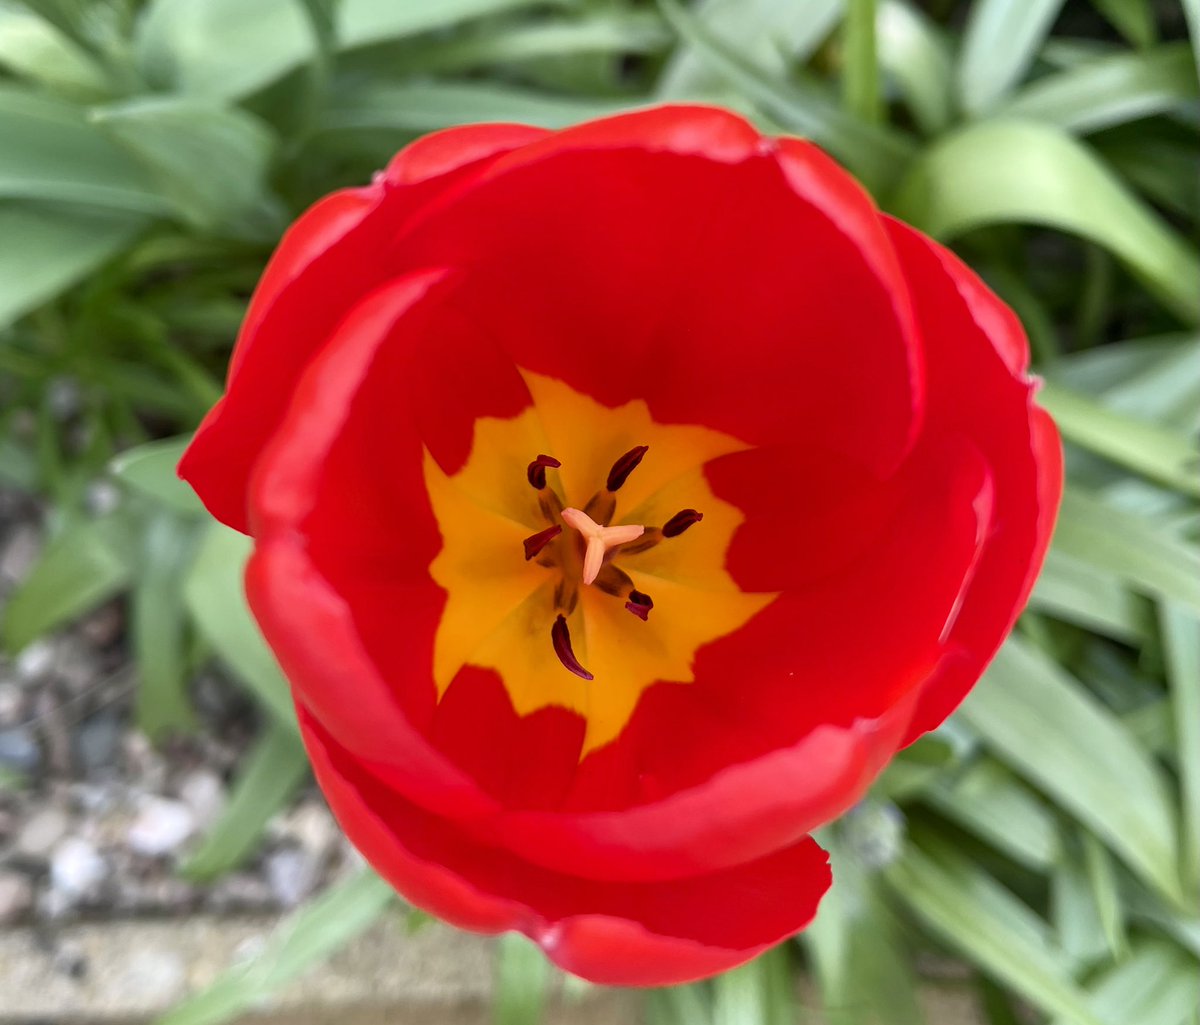 Sunday. Tulips 🌷 #Sunday #InBloom #Tulips #Flowers